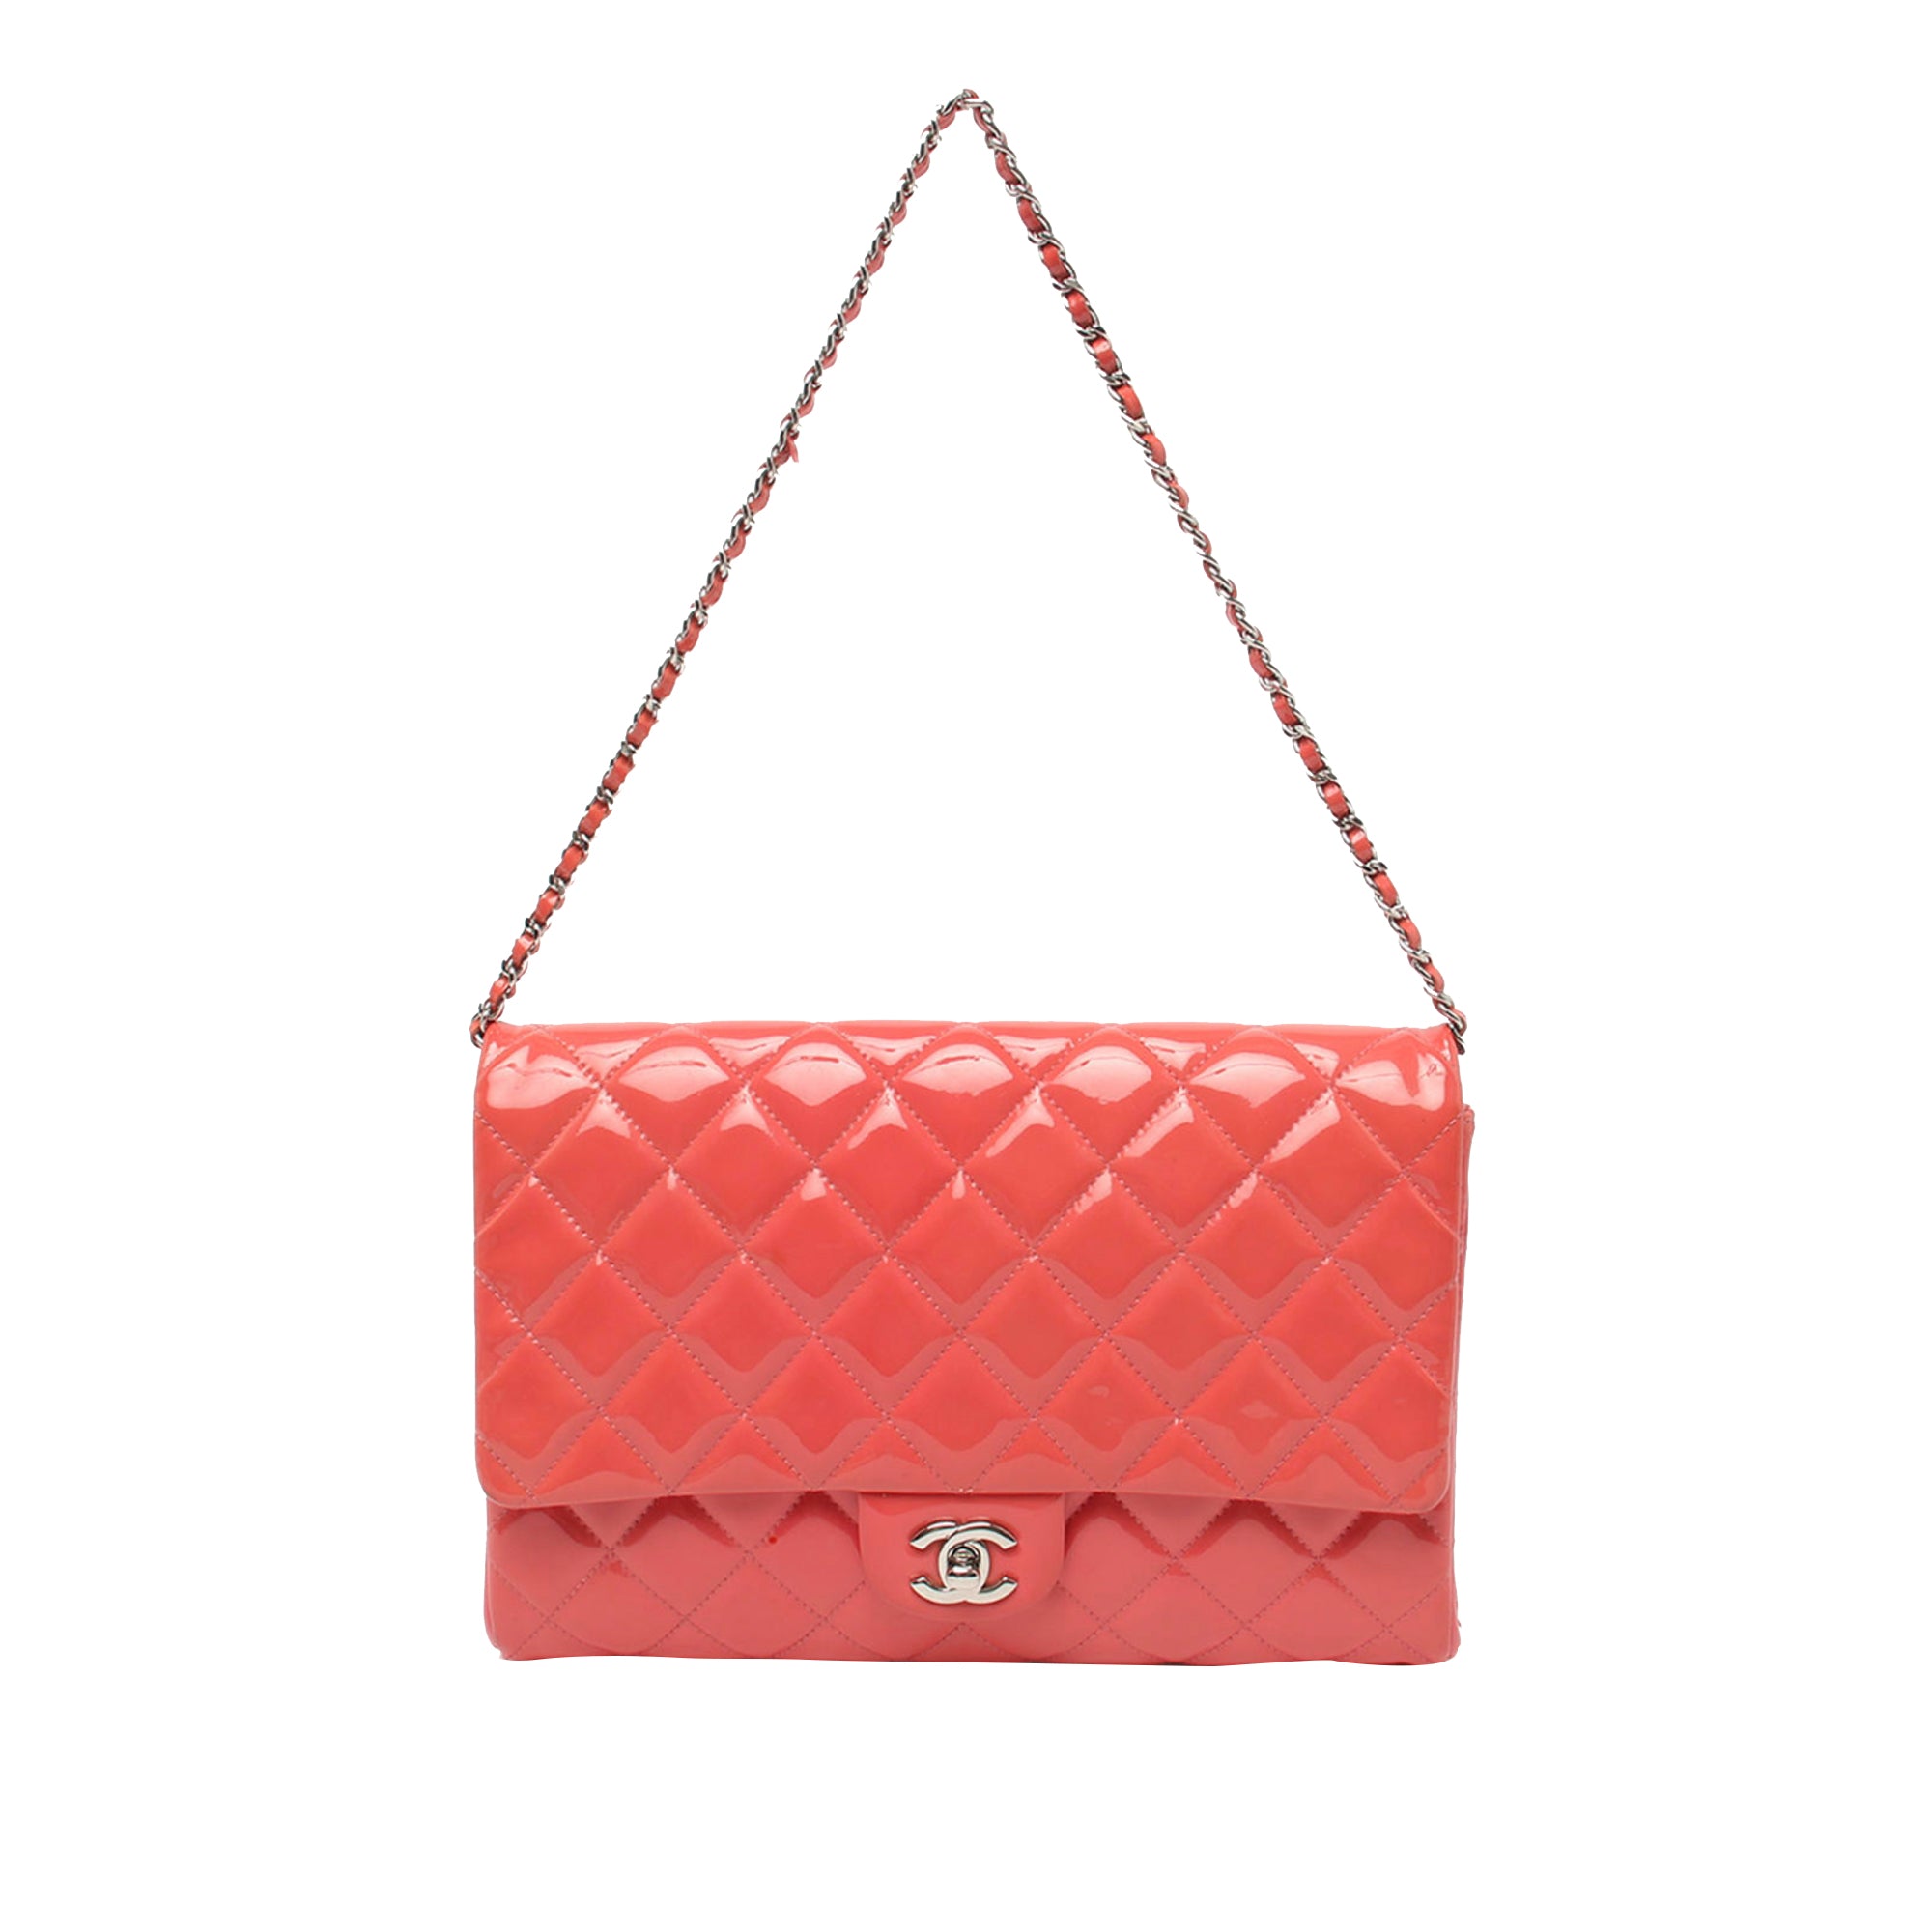 Chanel Patent Leather Flap Bag Coral – Vault 55